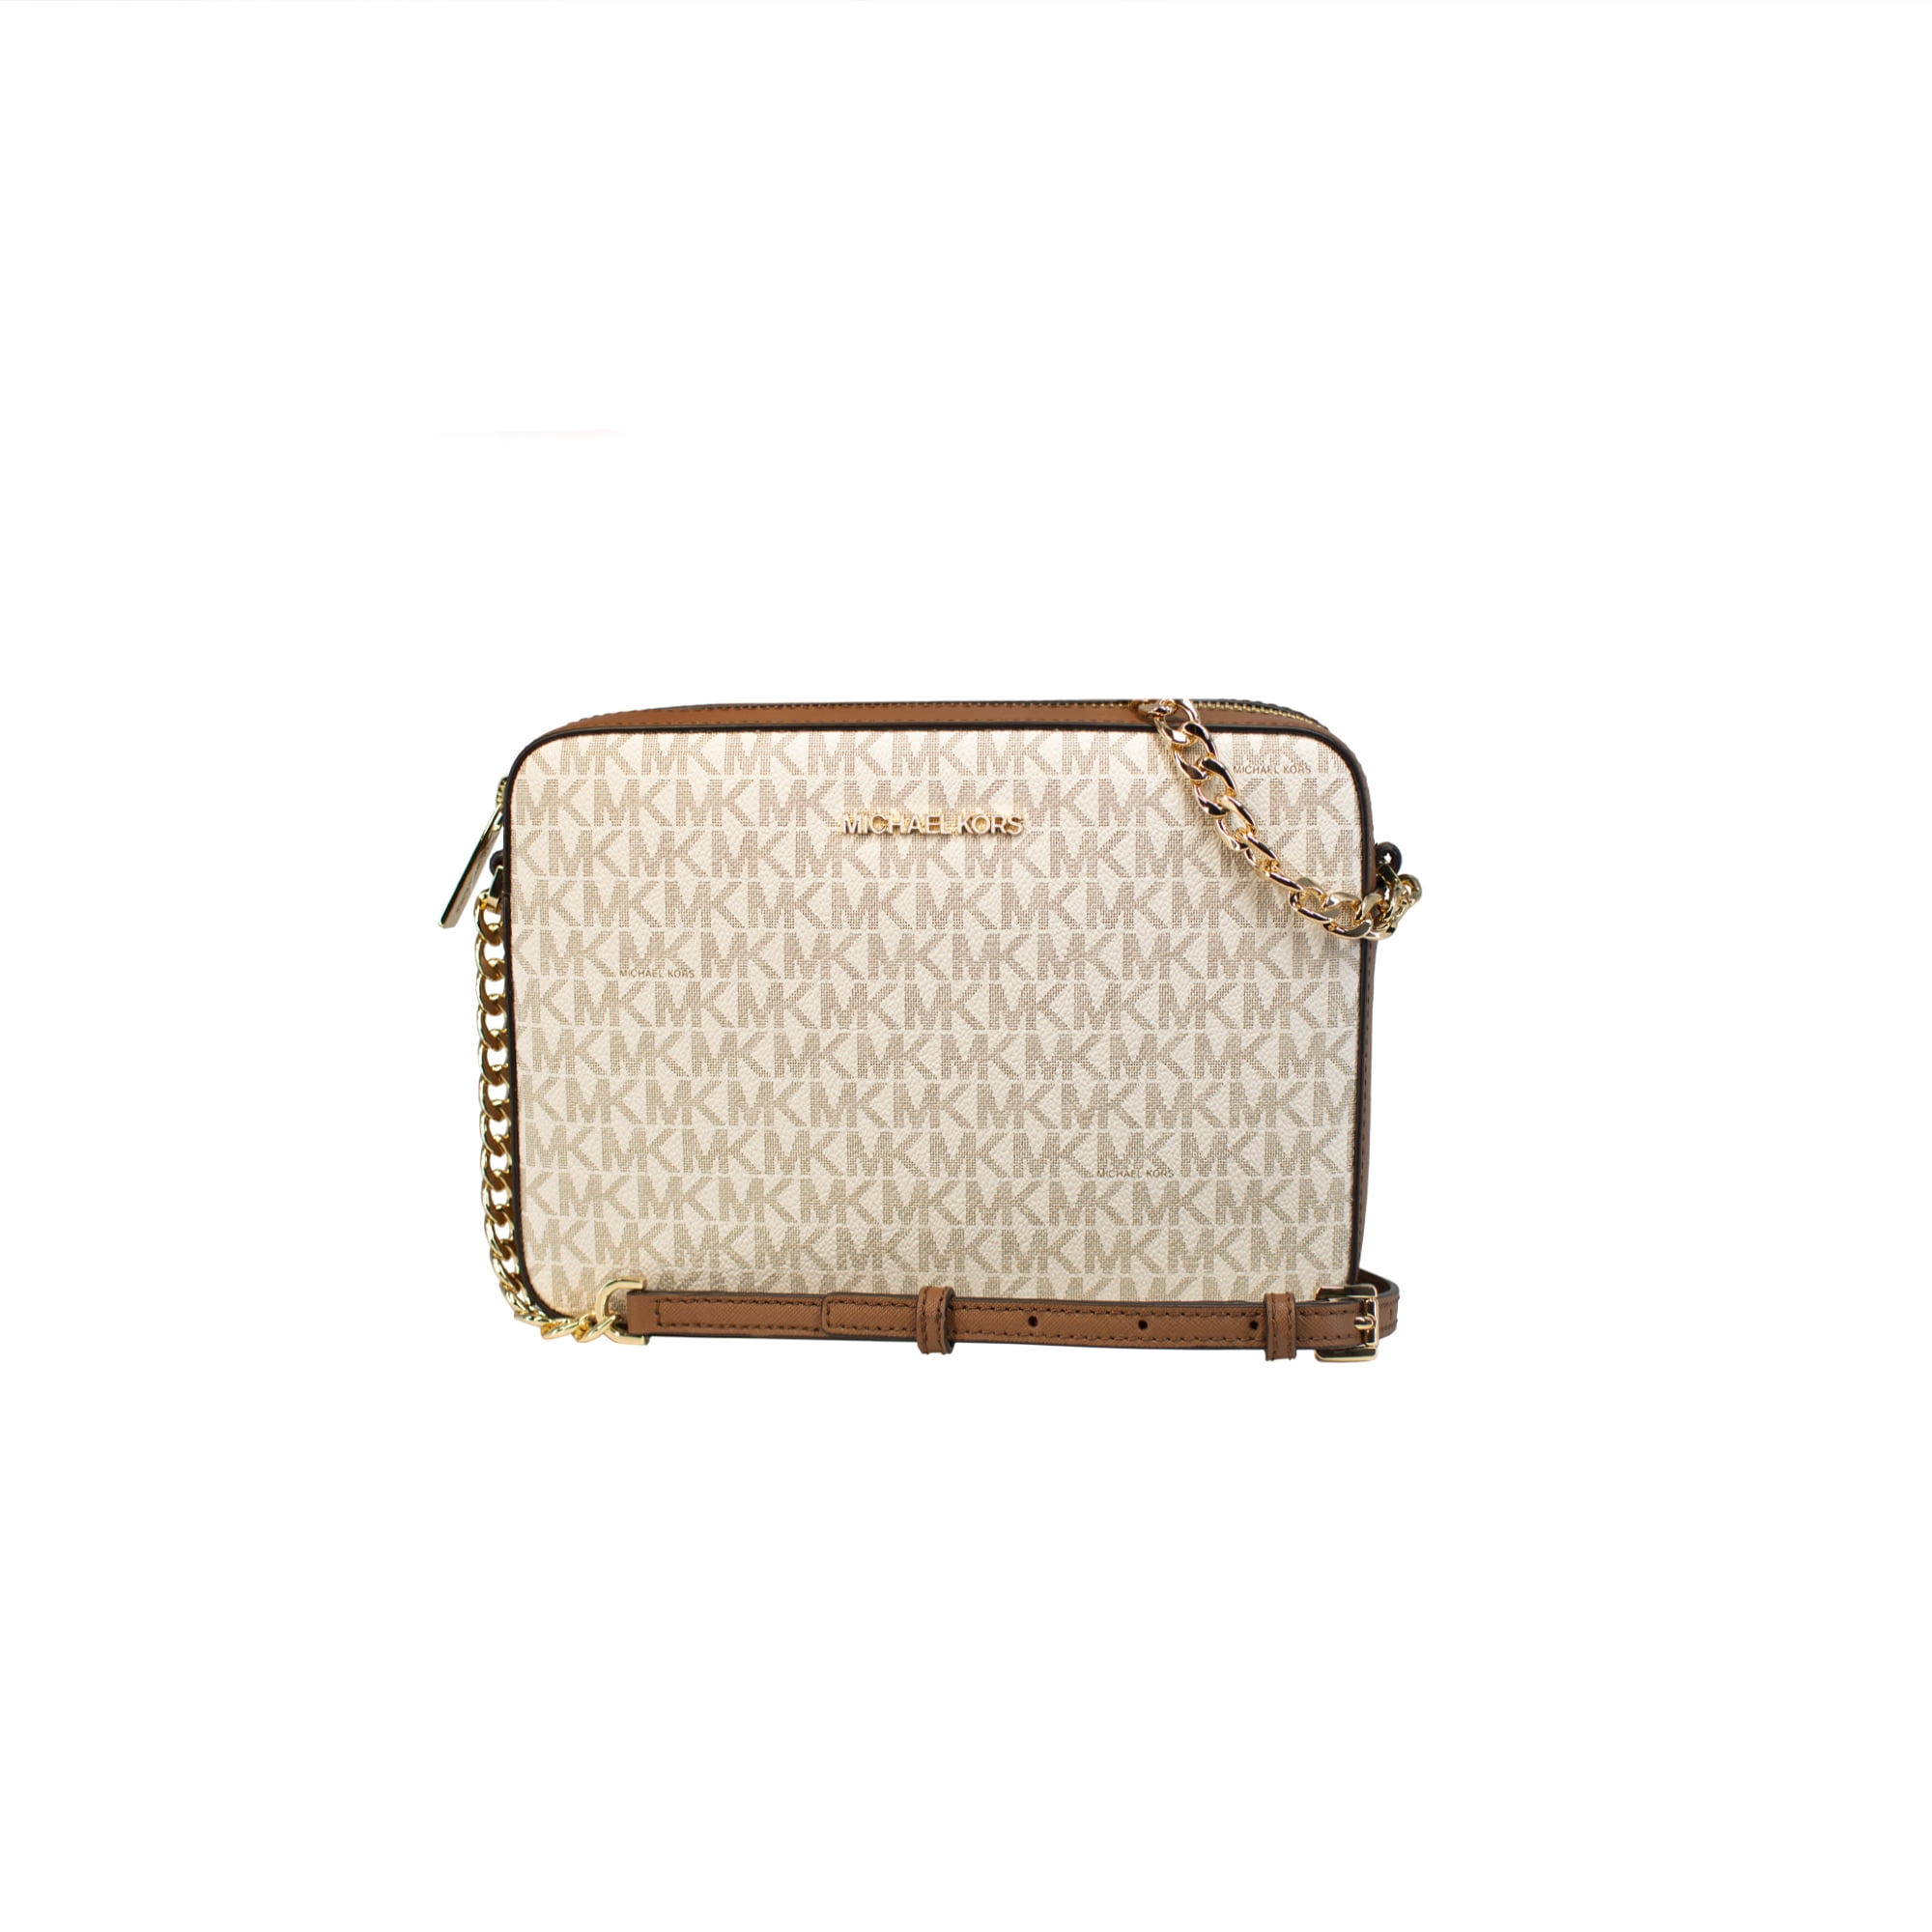 Michael Kors purse and wallet super nice set